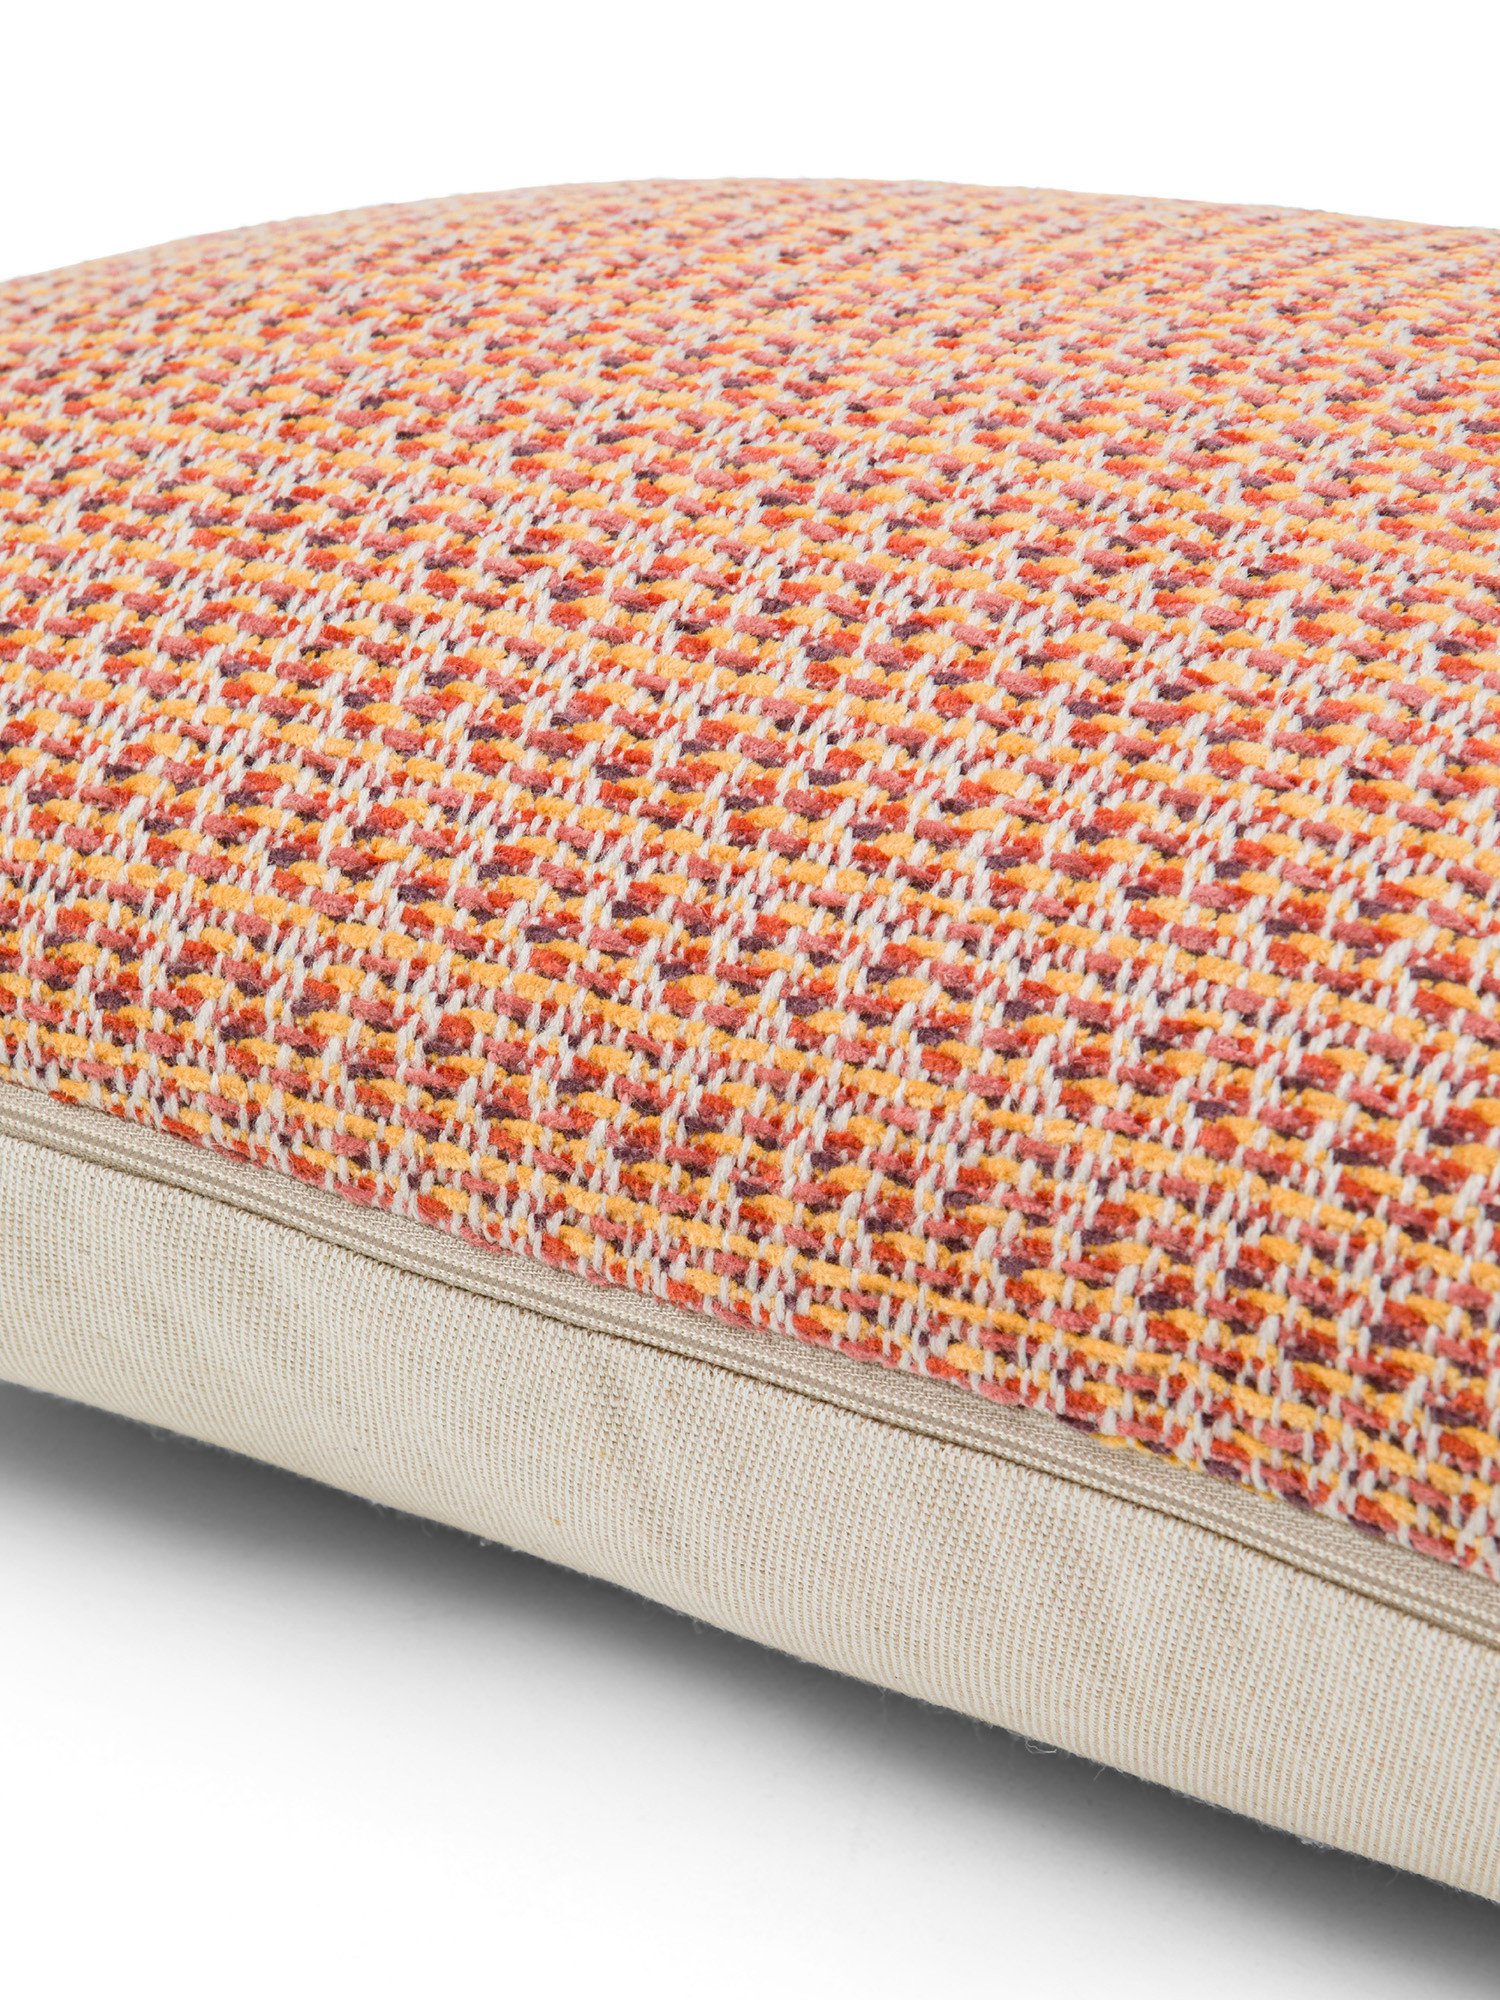 Cuscino maglia jacquard con frange 35X55cm, Arancione, large image number 2